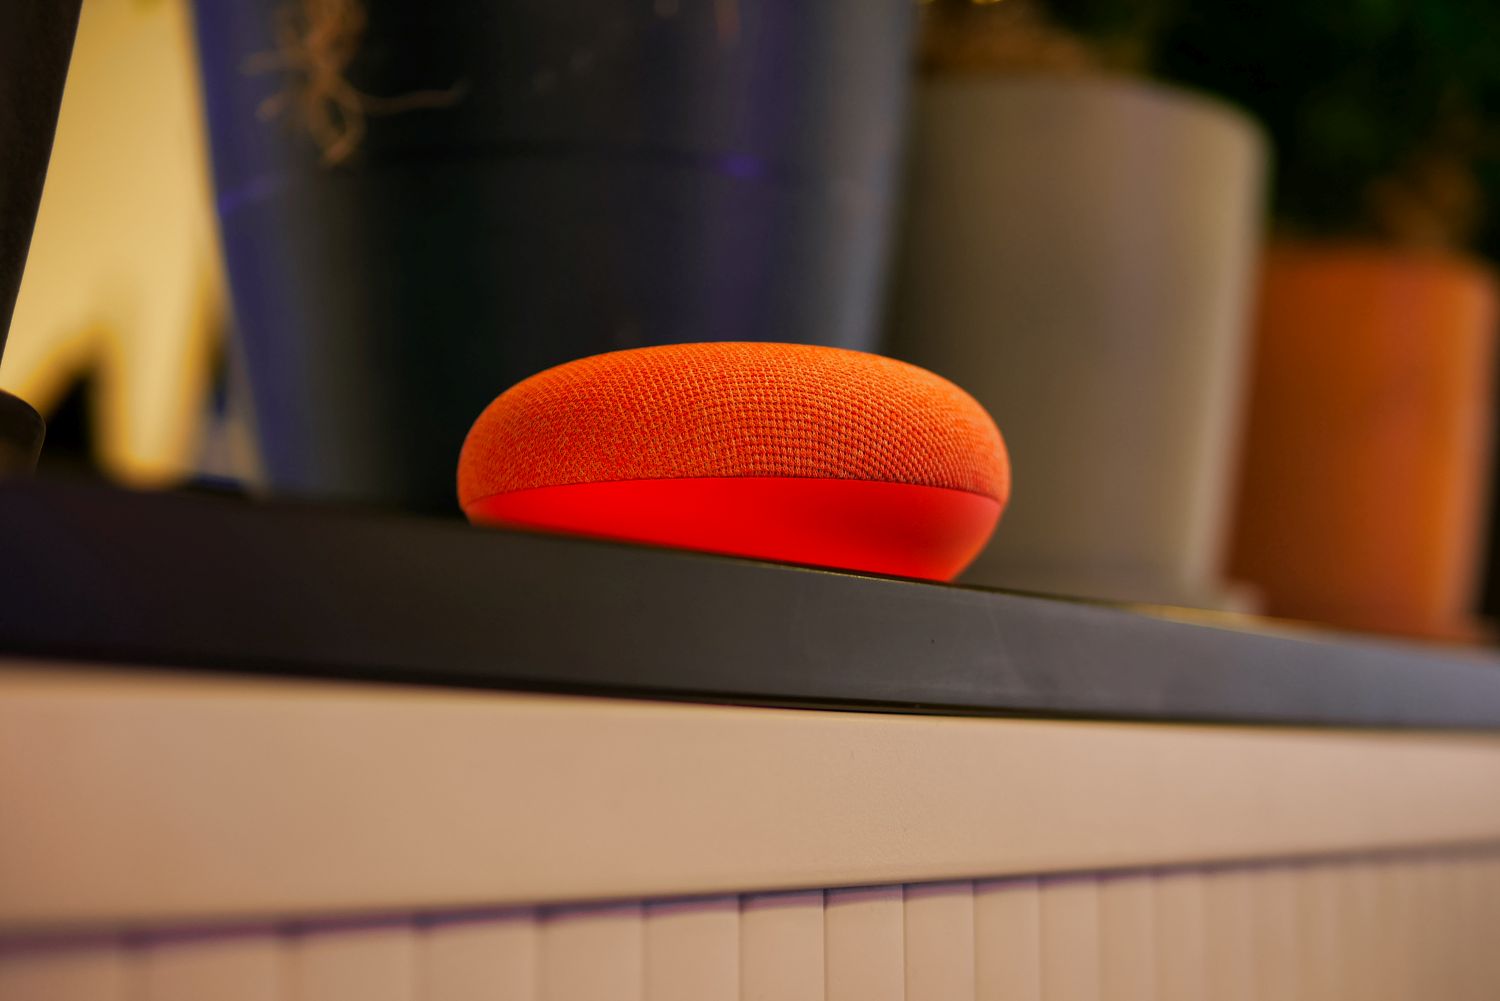 Google Nest Mini (2nd Gen) - Smart Home Speaker with Google